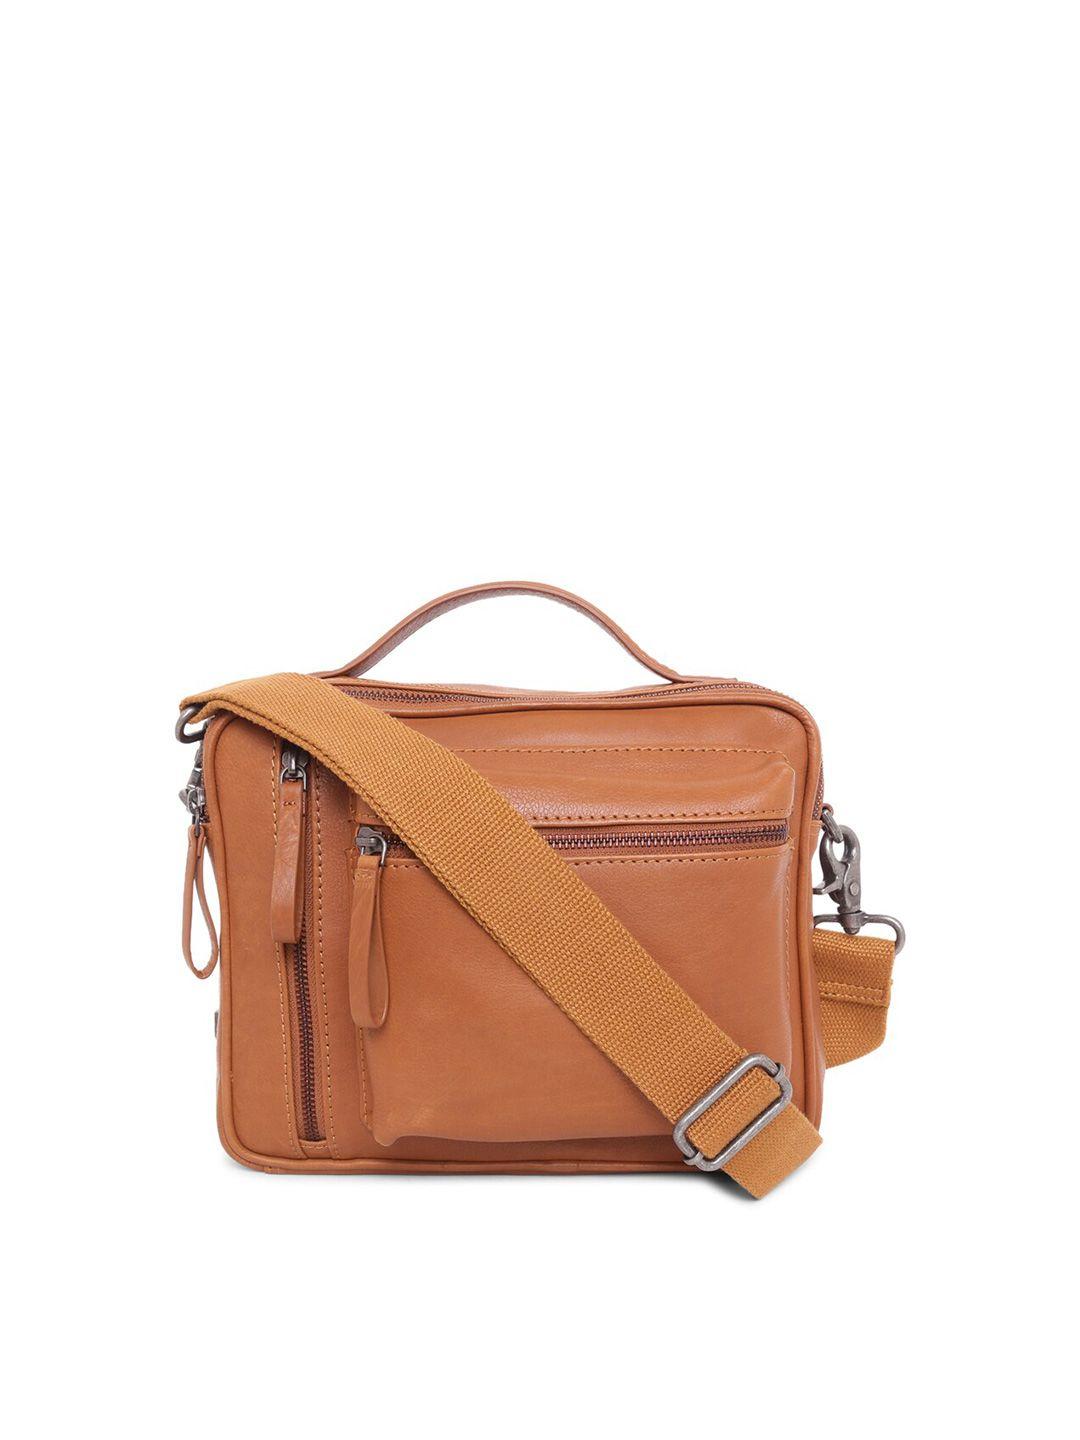 tom lang london unisex tan brown solid leather messenger bag